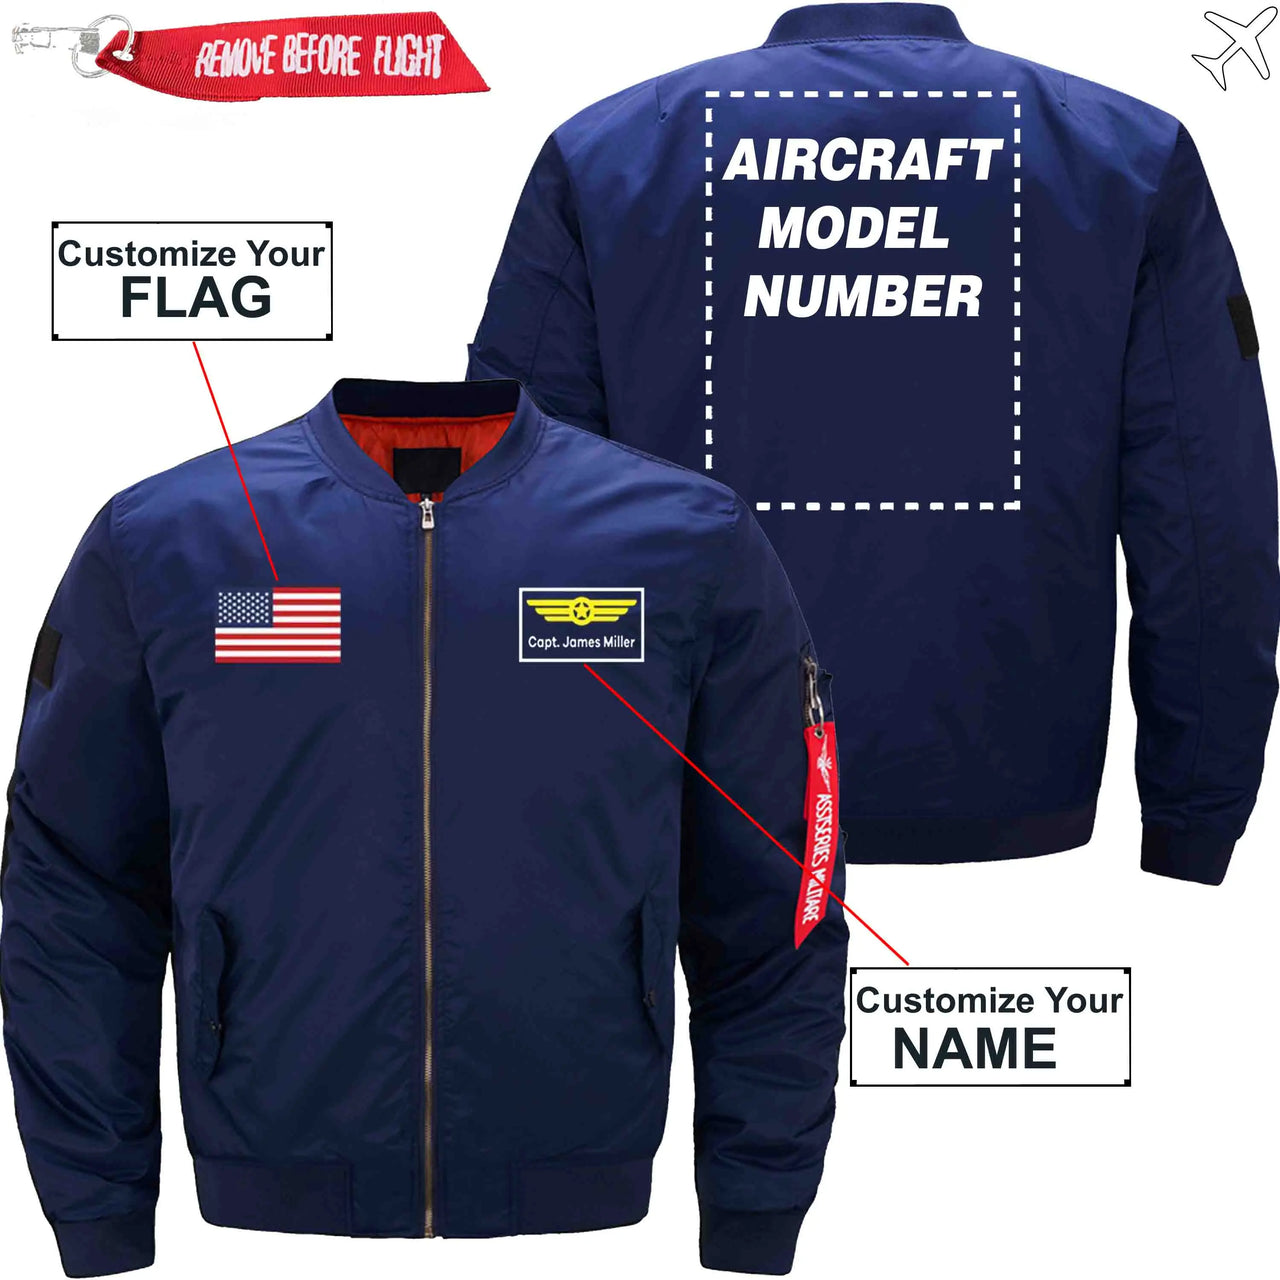 CUSTOM FLAG & NAME WITH AIRCRAFT MODEL NUMBER - JACKET THE AV8R